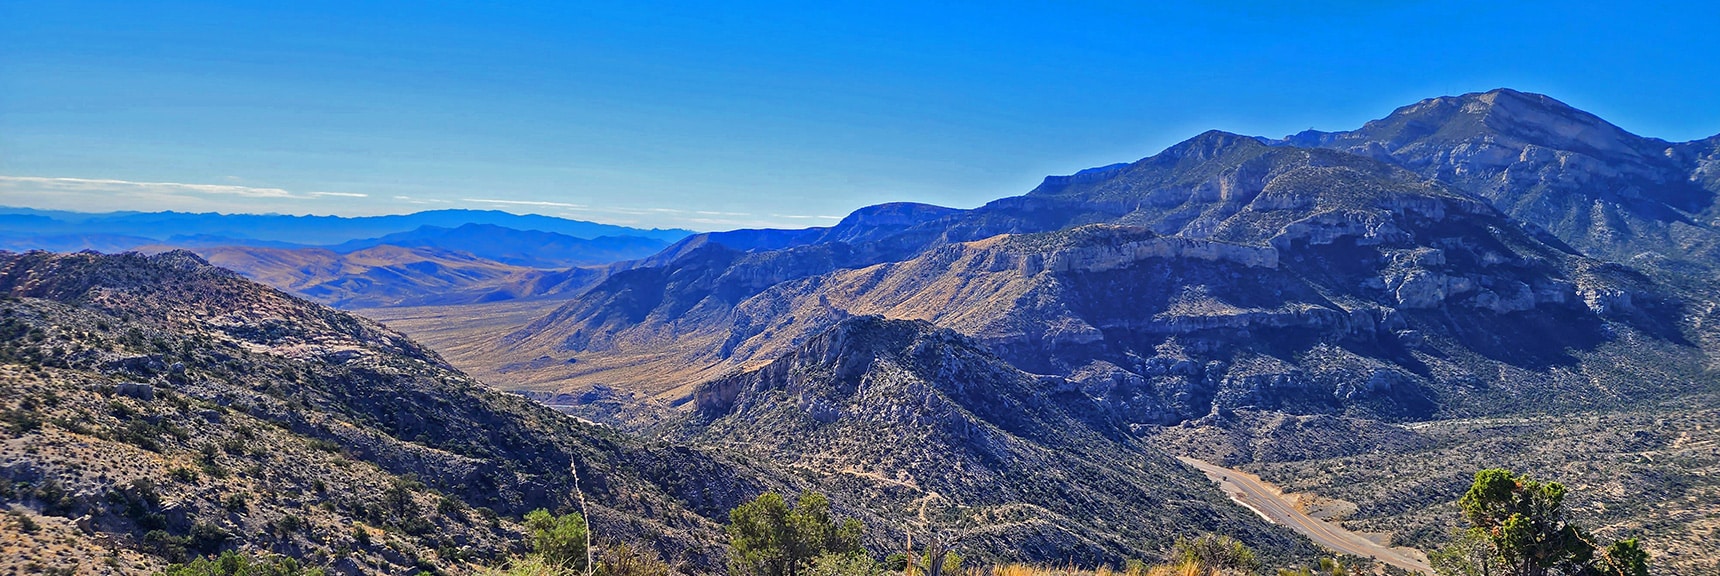 Potosi Mountain from South End of Upper Crest Ridgeline. | Hollow Rock Peak | Rainbow Mountain Wilderness, Nevada